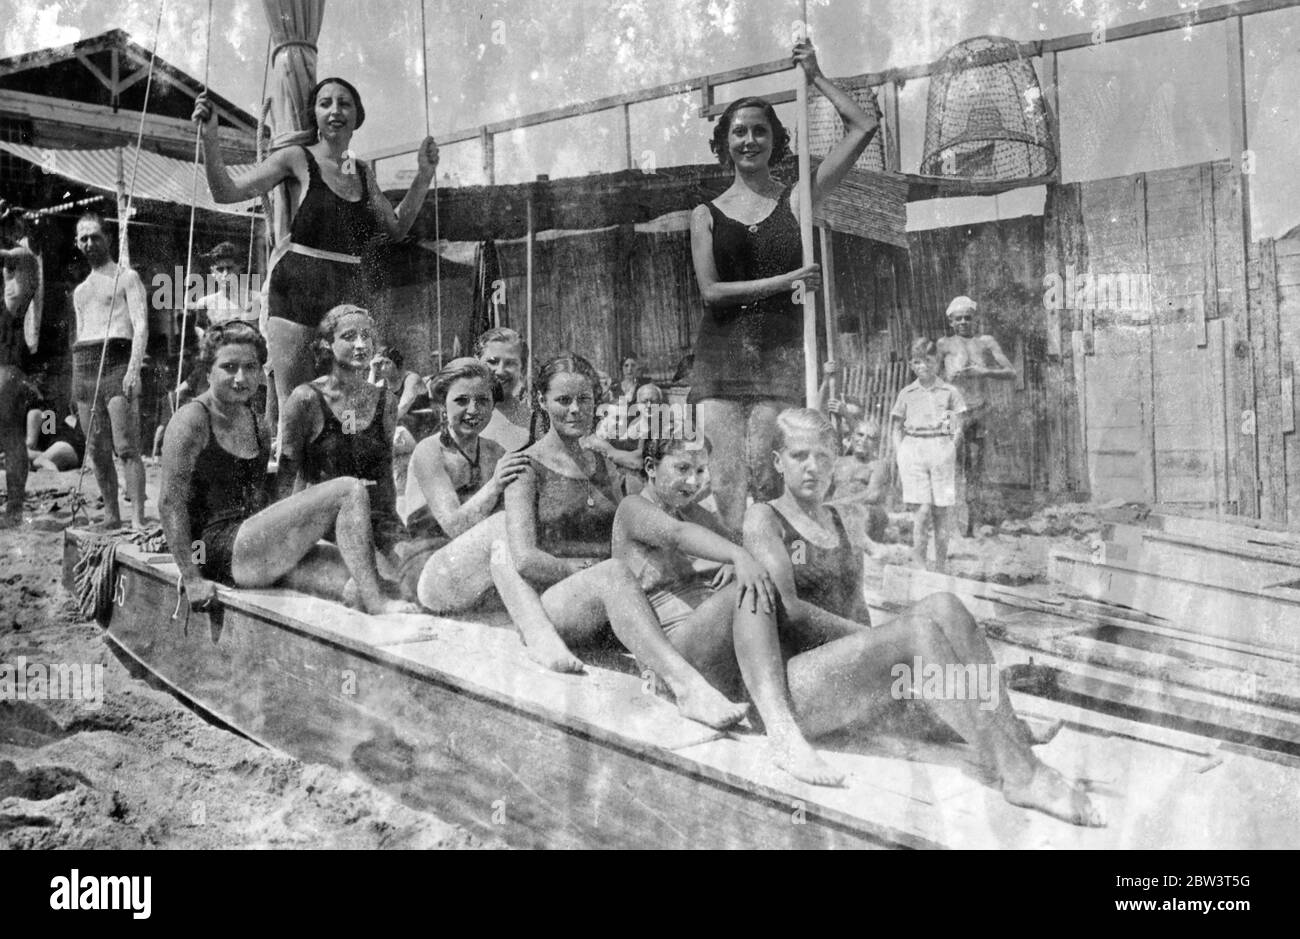 Spanische Mädchen in Aquatic Kostüm, Barcelona. 26 Mai 1936 Stockfoto